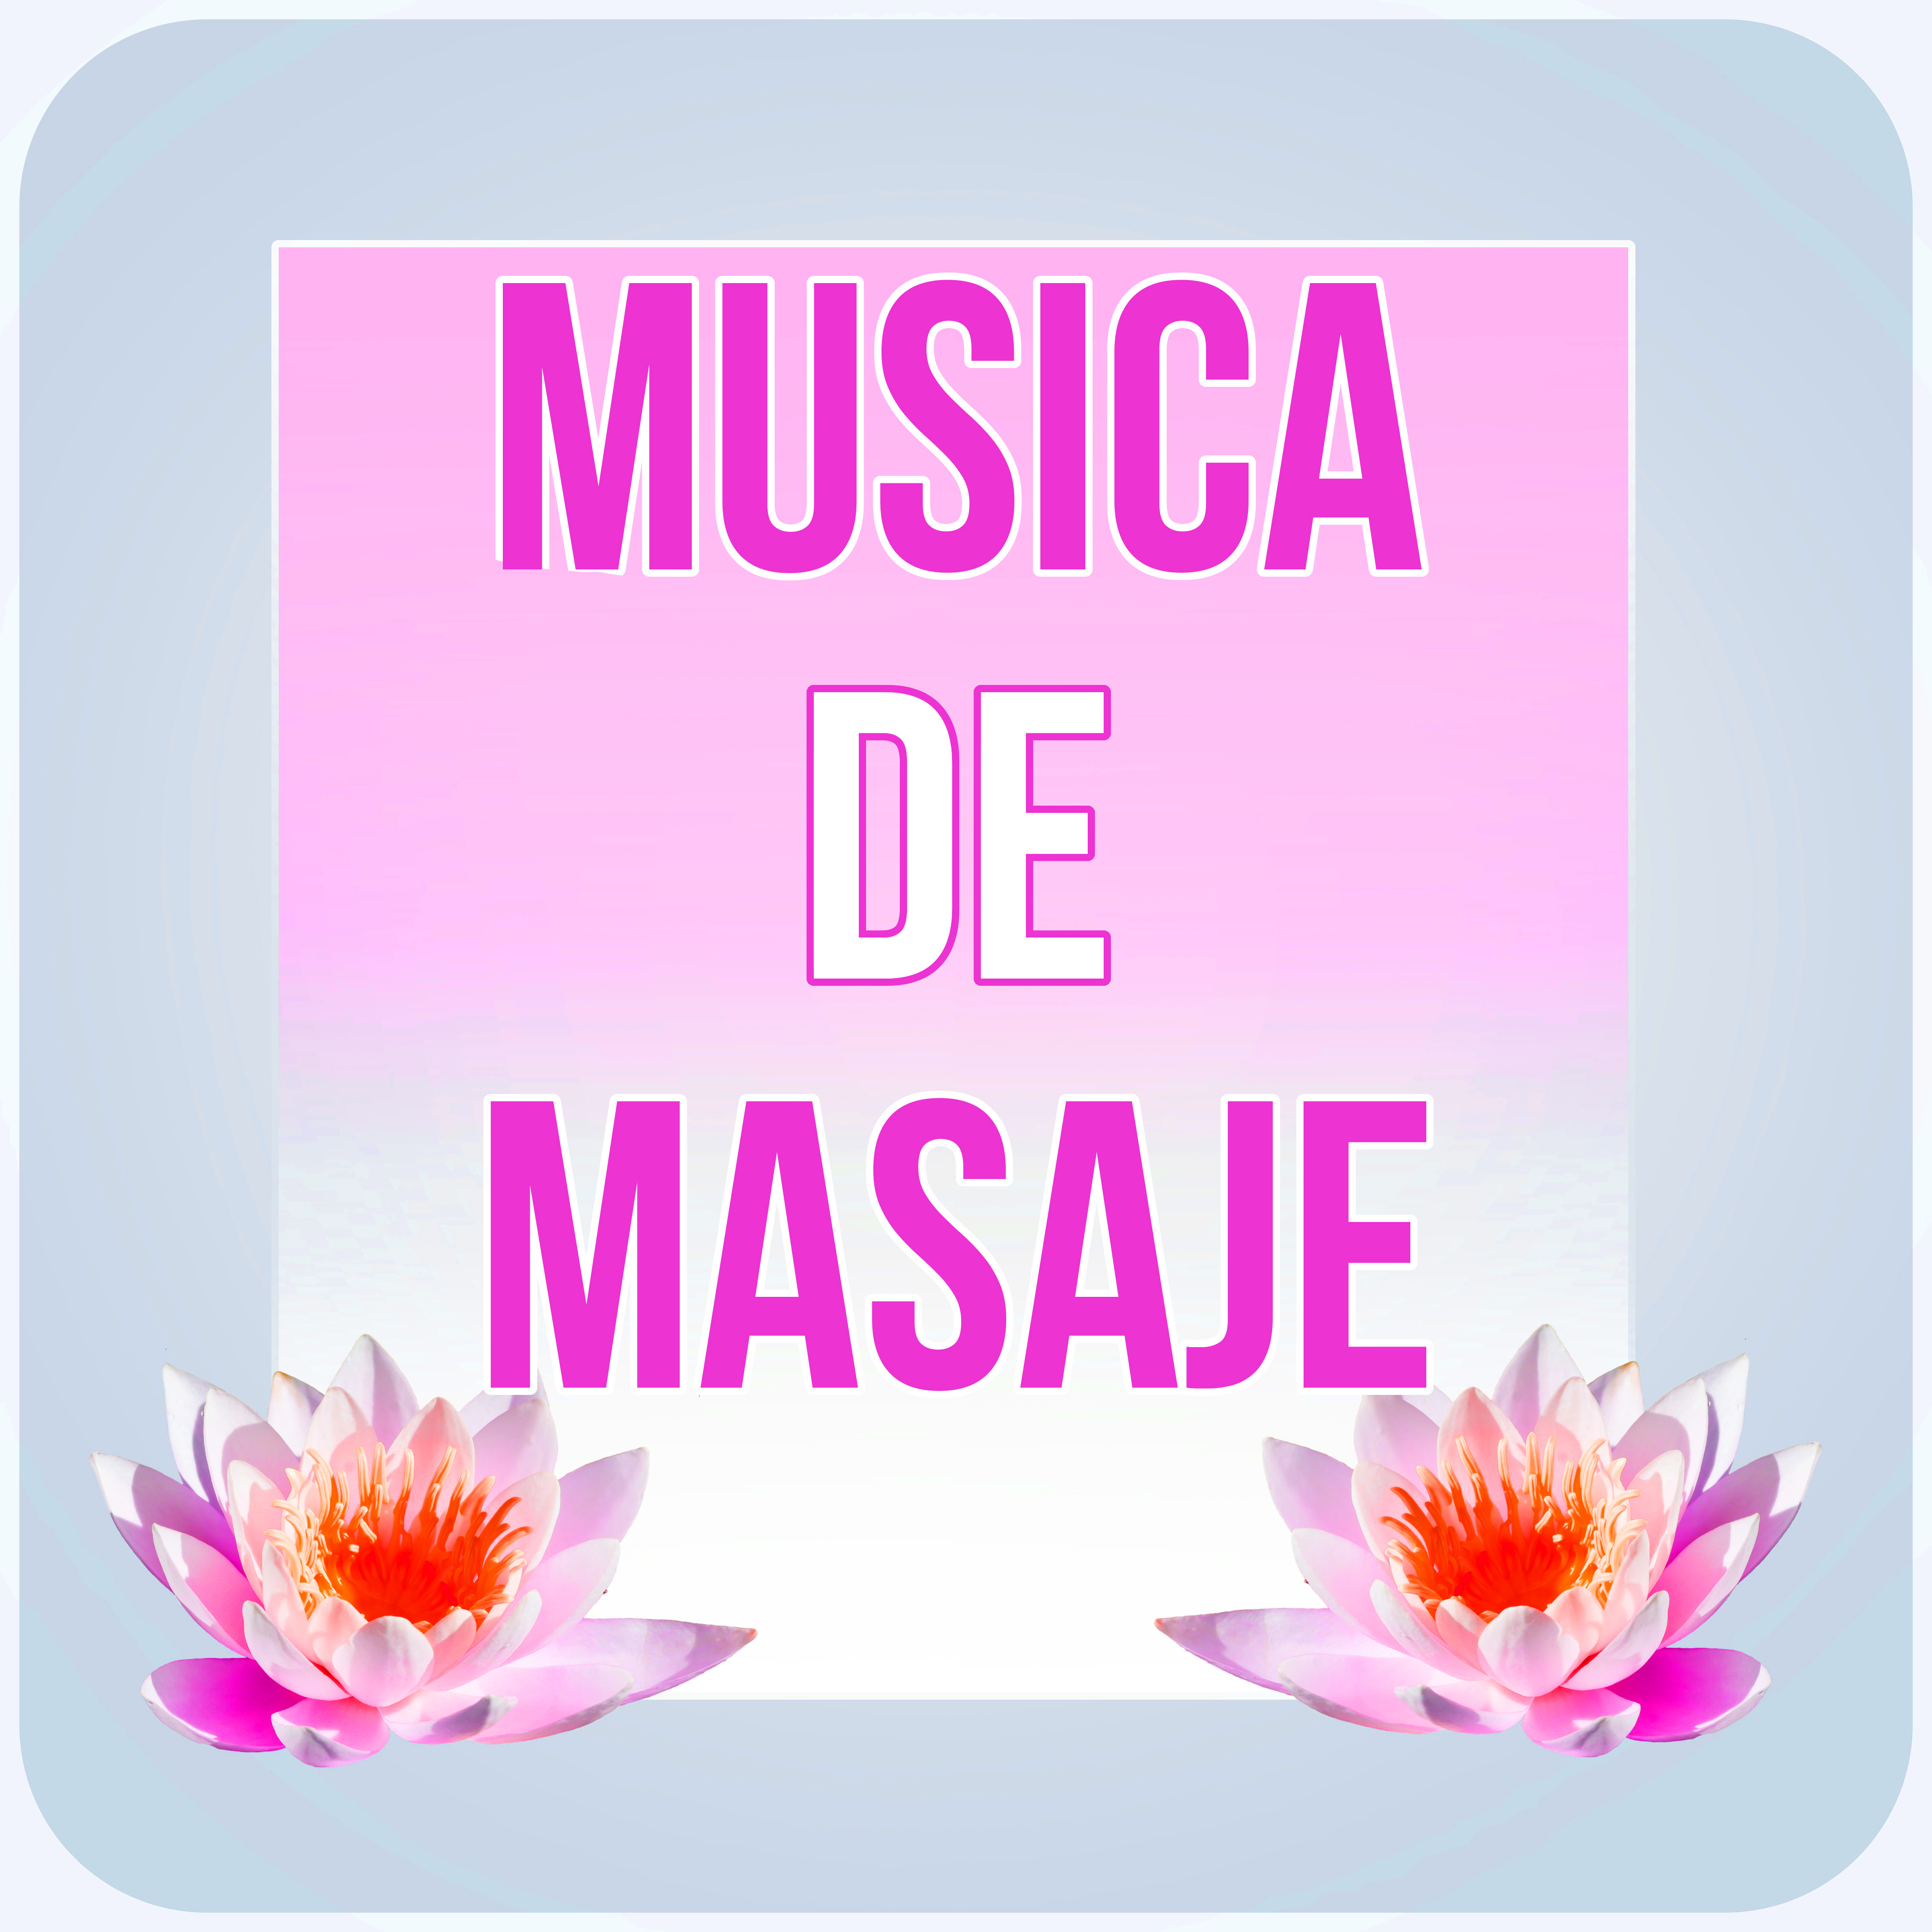 Musica de Masaje  Musica para Relajacion, Musica Relajante, Musica Reiki, Sonidos de la Naturaleza, Mu sica de Ambiente para de Masaje, Masaje Ero tico